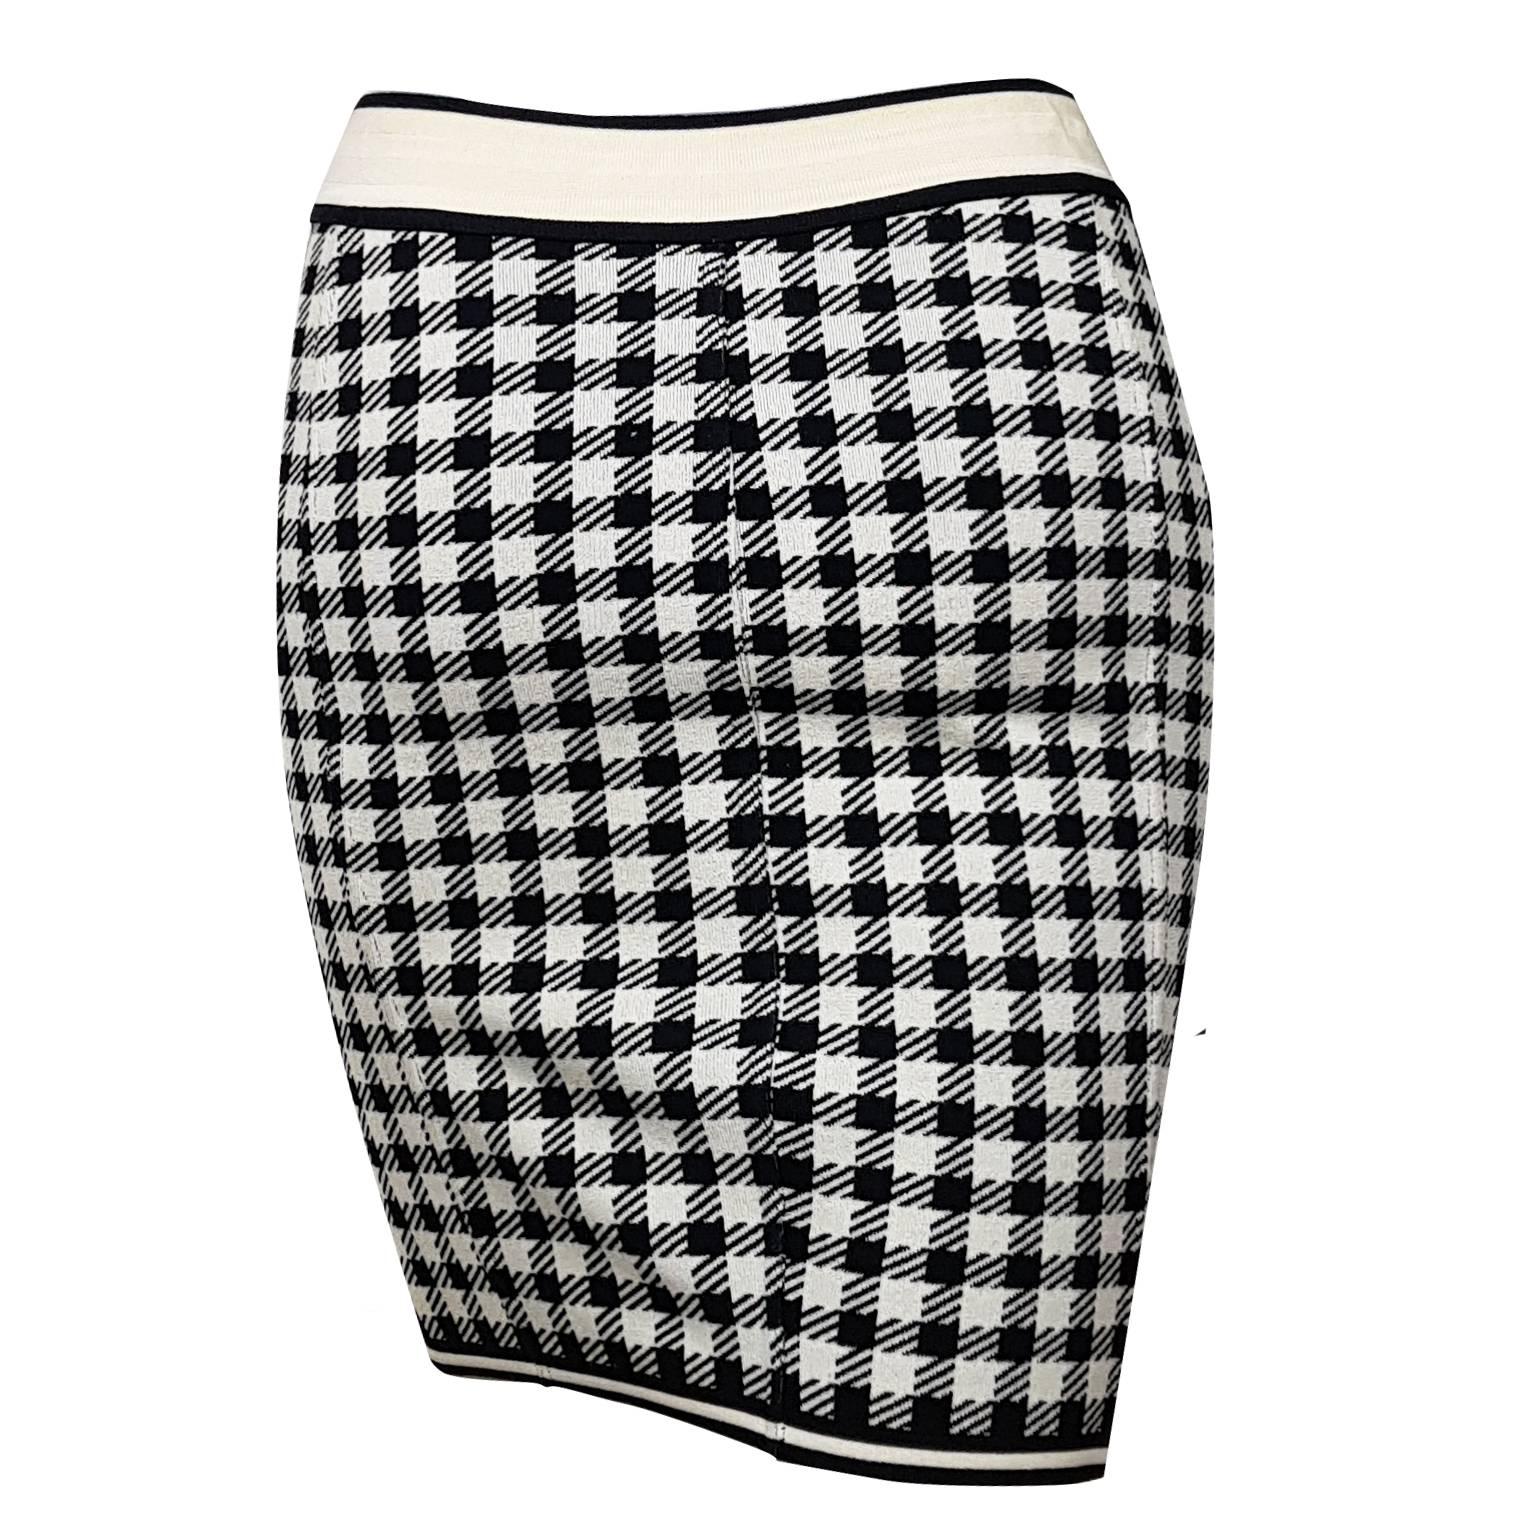 Azzedine Alaia Tati Jacket Bustier Shorts And Skirt 4 piece Set, S / S 1991 For Sale 2